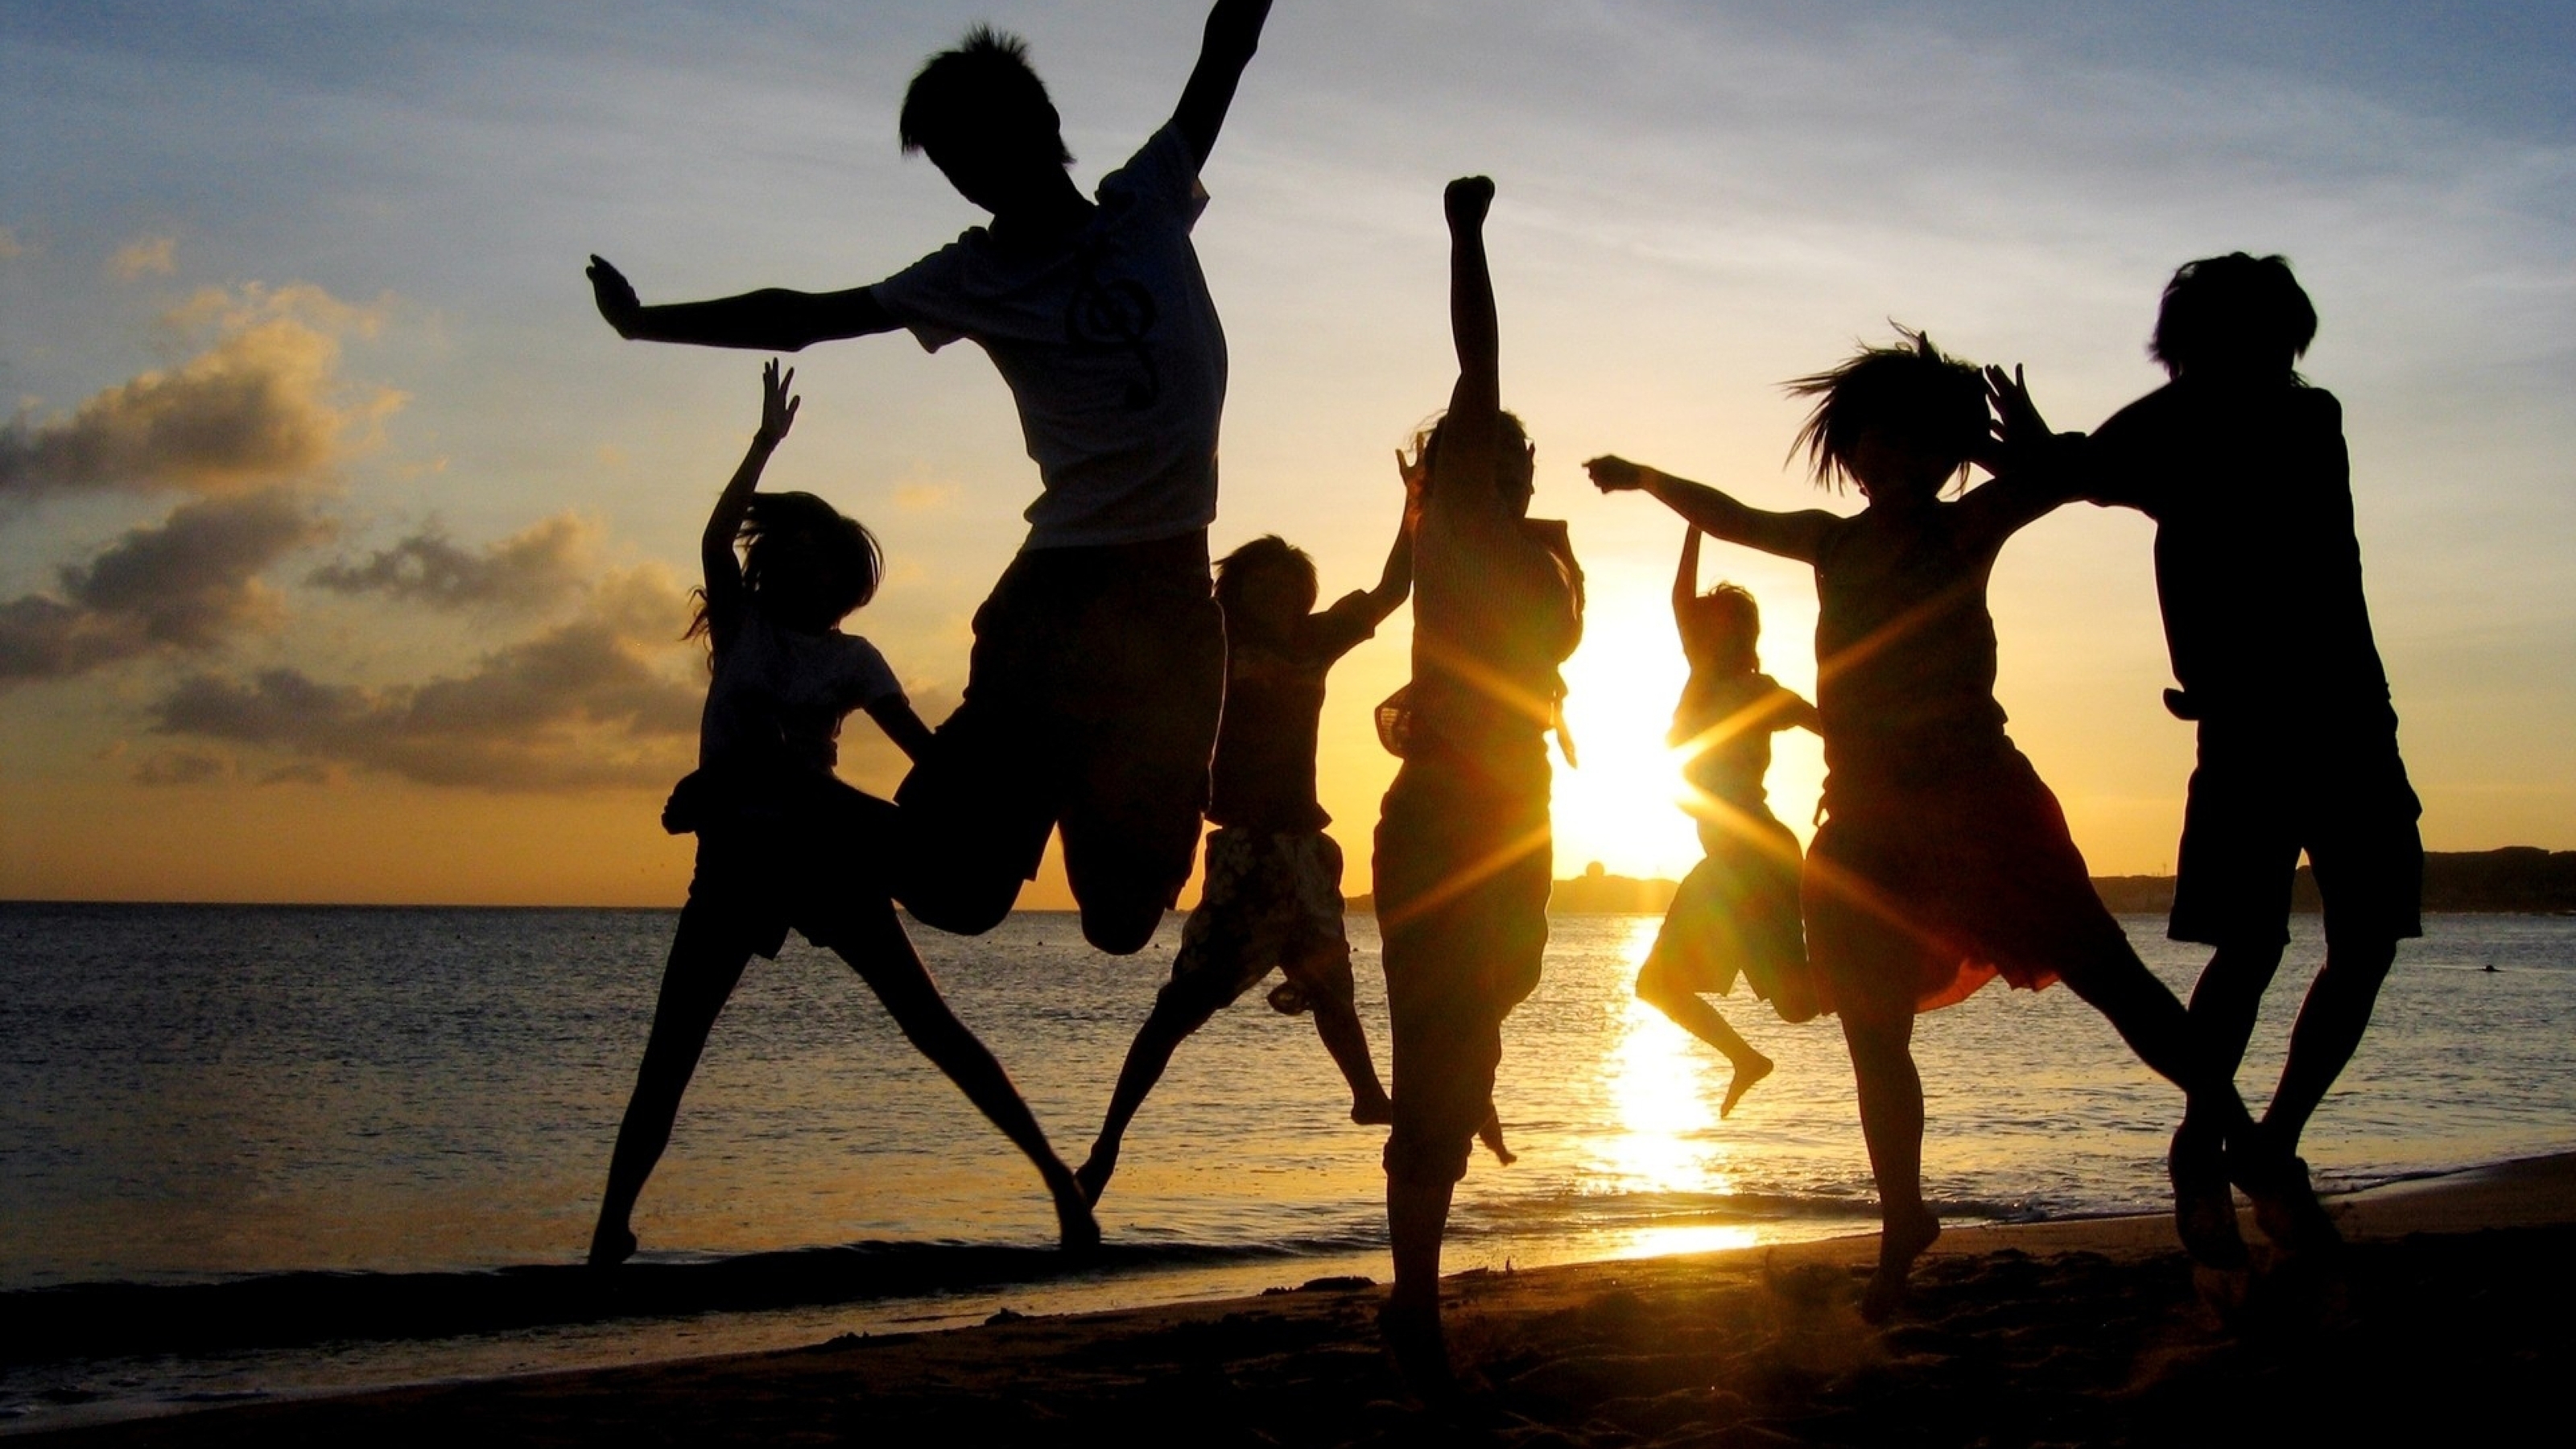 Image: People, silhouette, vacation, friends, fun, mood, sea, beach, sunset, sun, horizon, sky, clouds